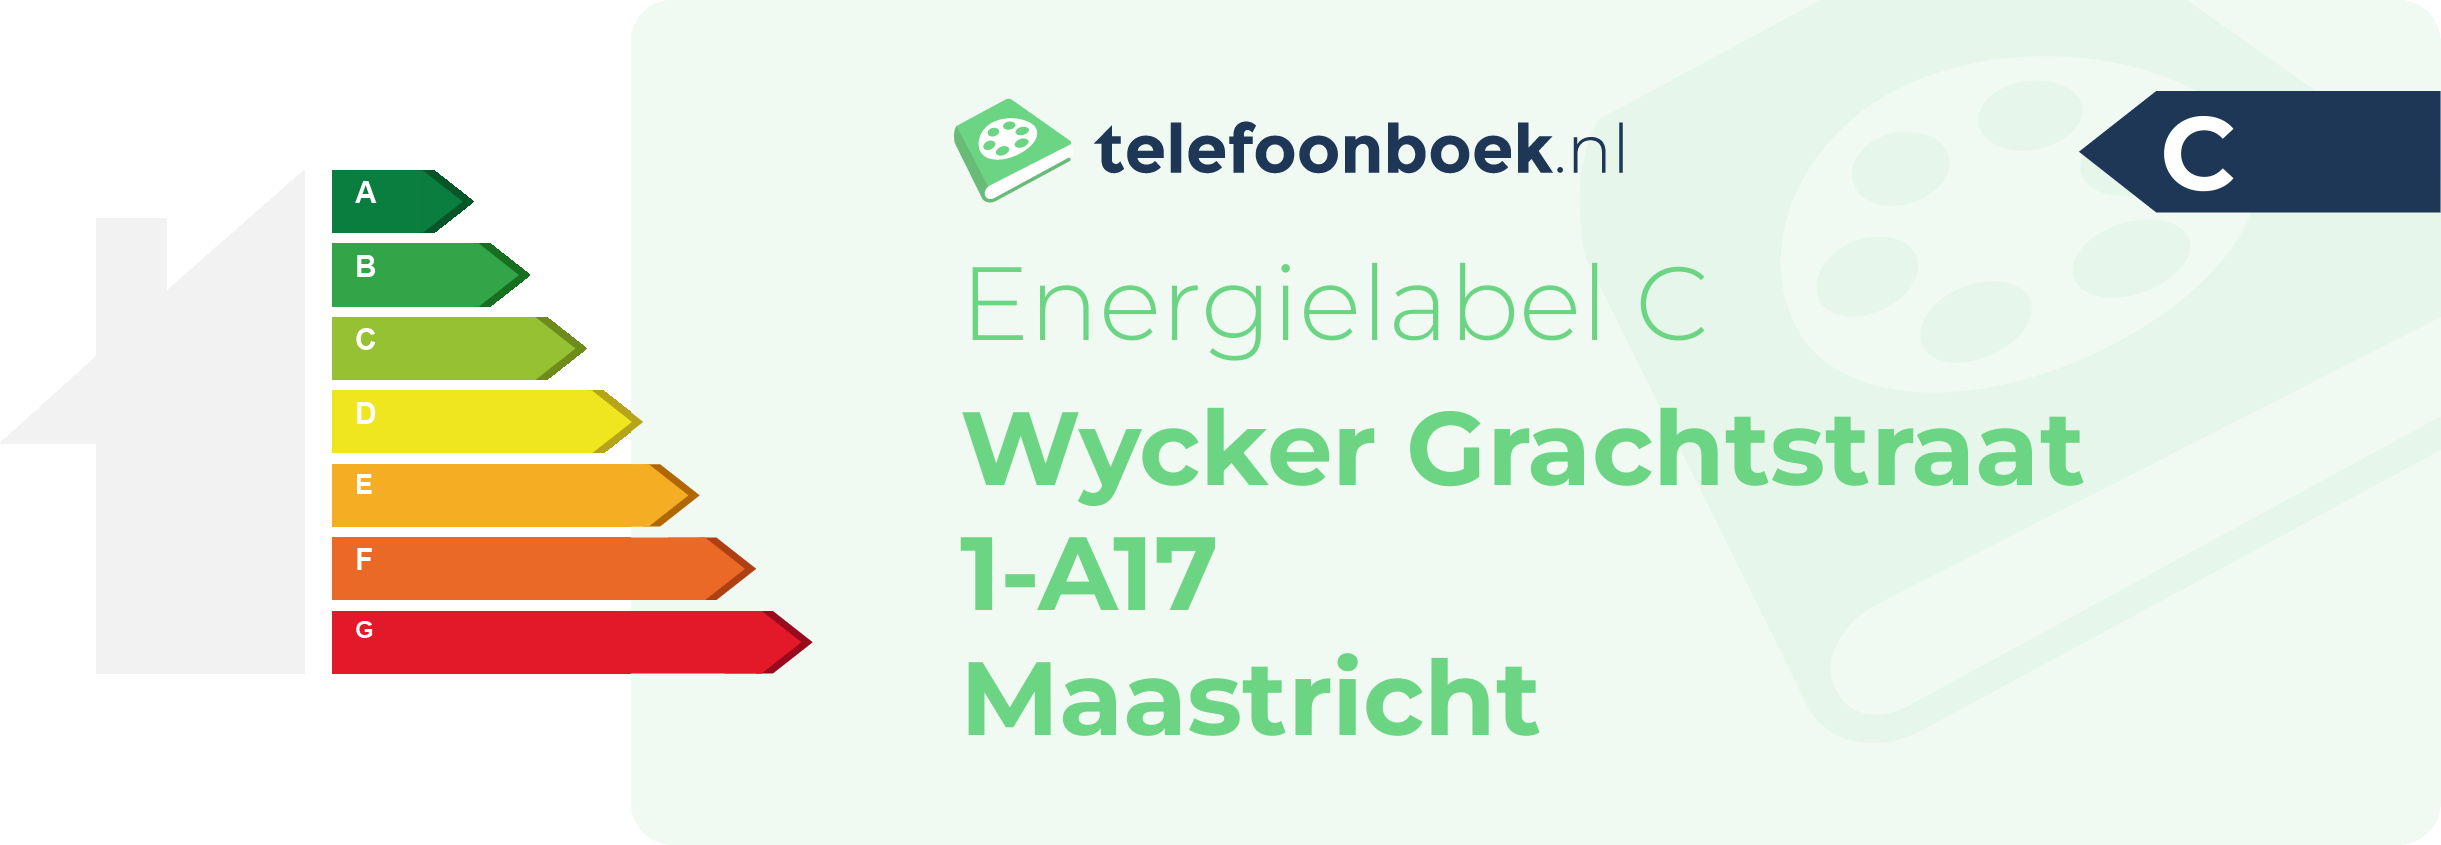 Energielabel Wycker Grachtstraat 1-A17 Maastricht